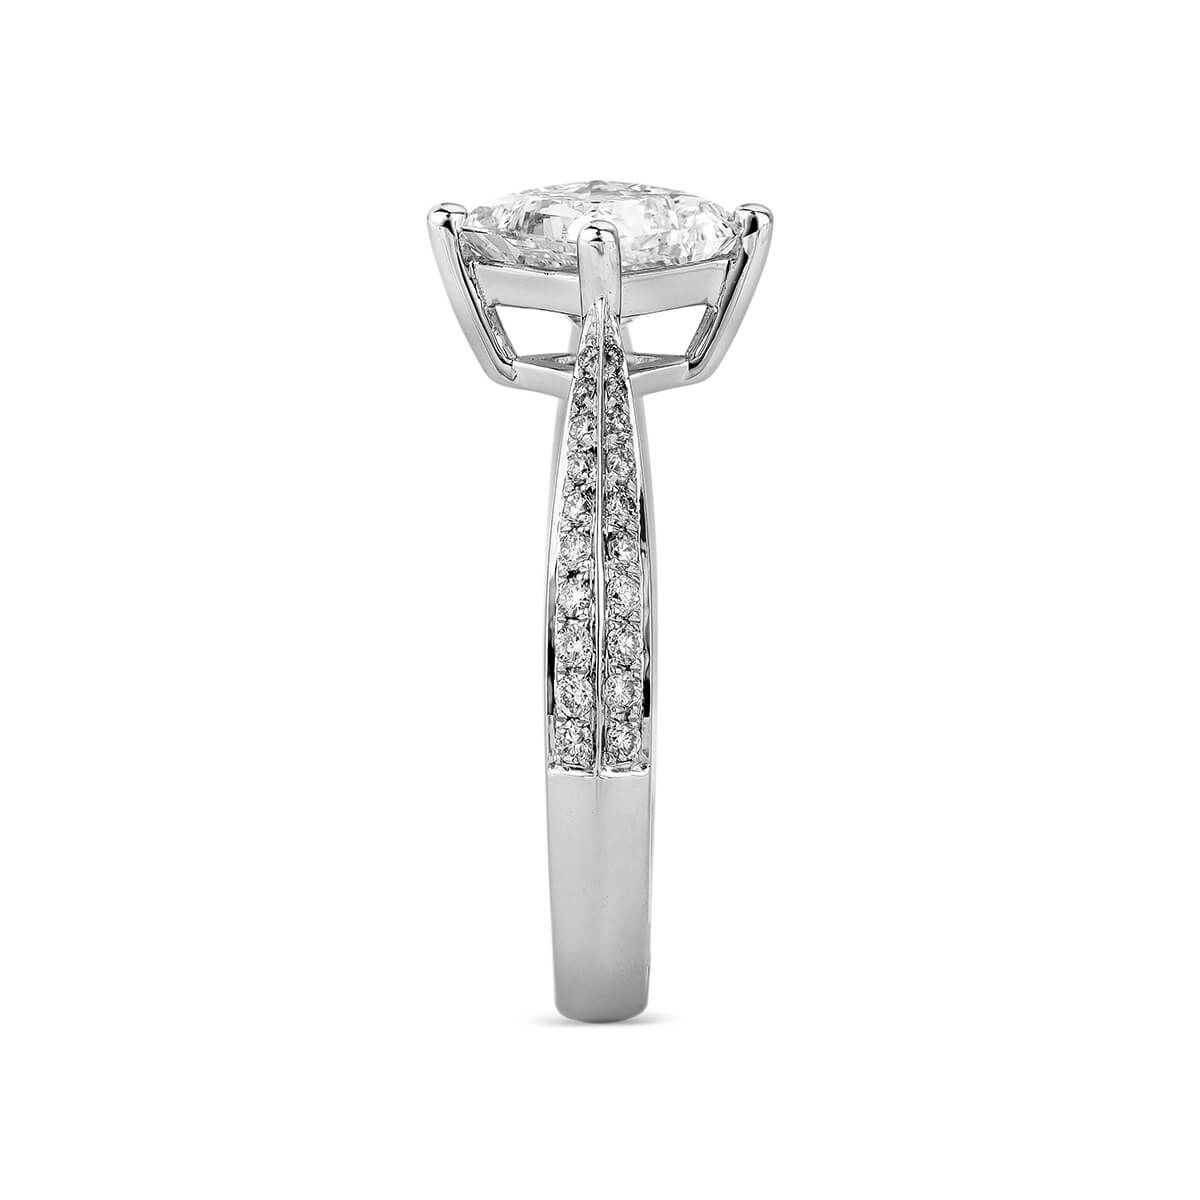 White Diamond Ring, 1.21 Ct. (1.41 Ct. TW), Princess shape, GIA Certified, 6225059940